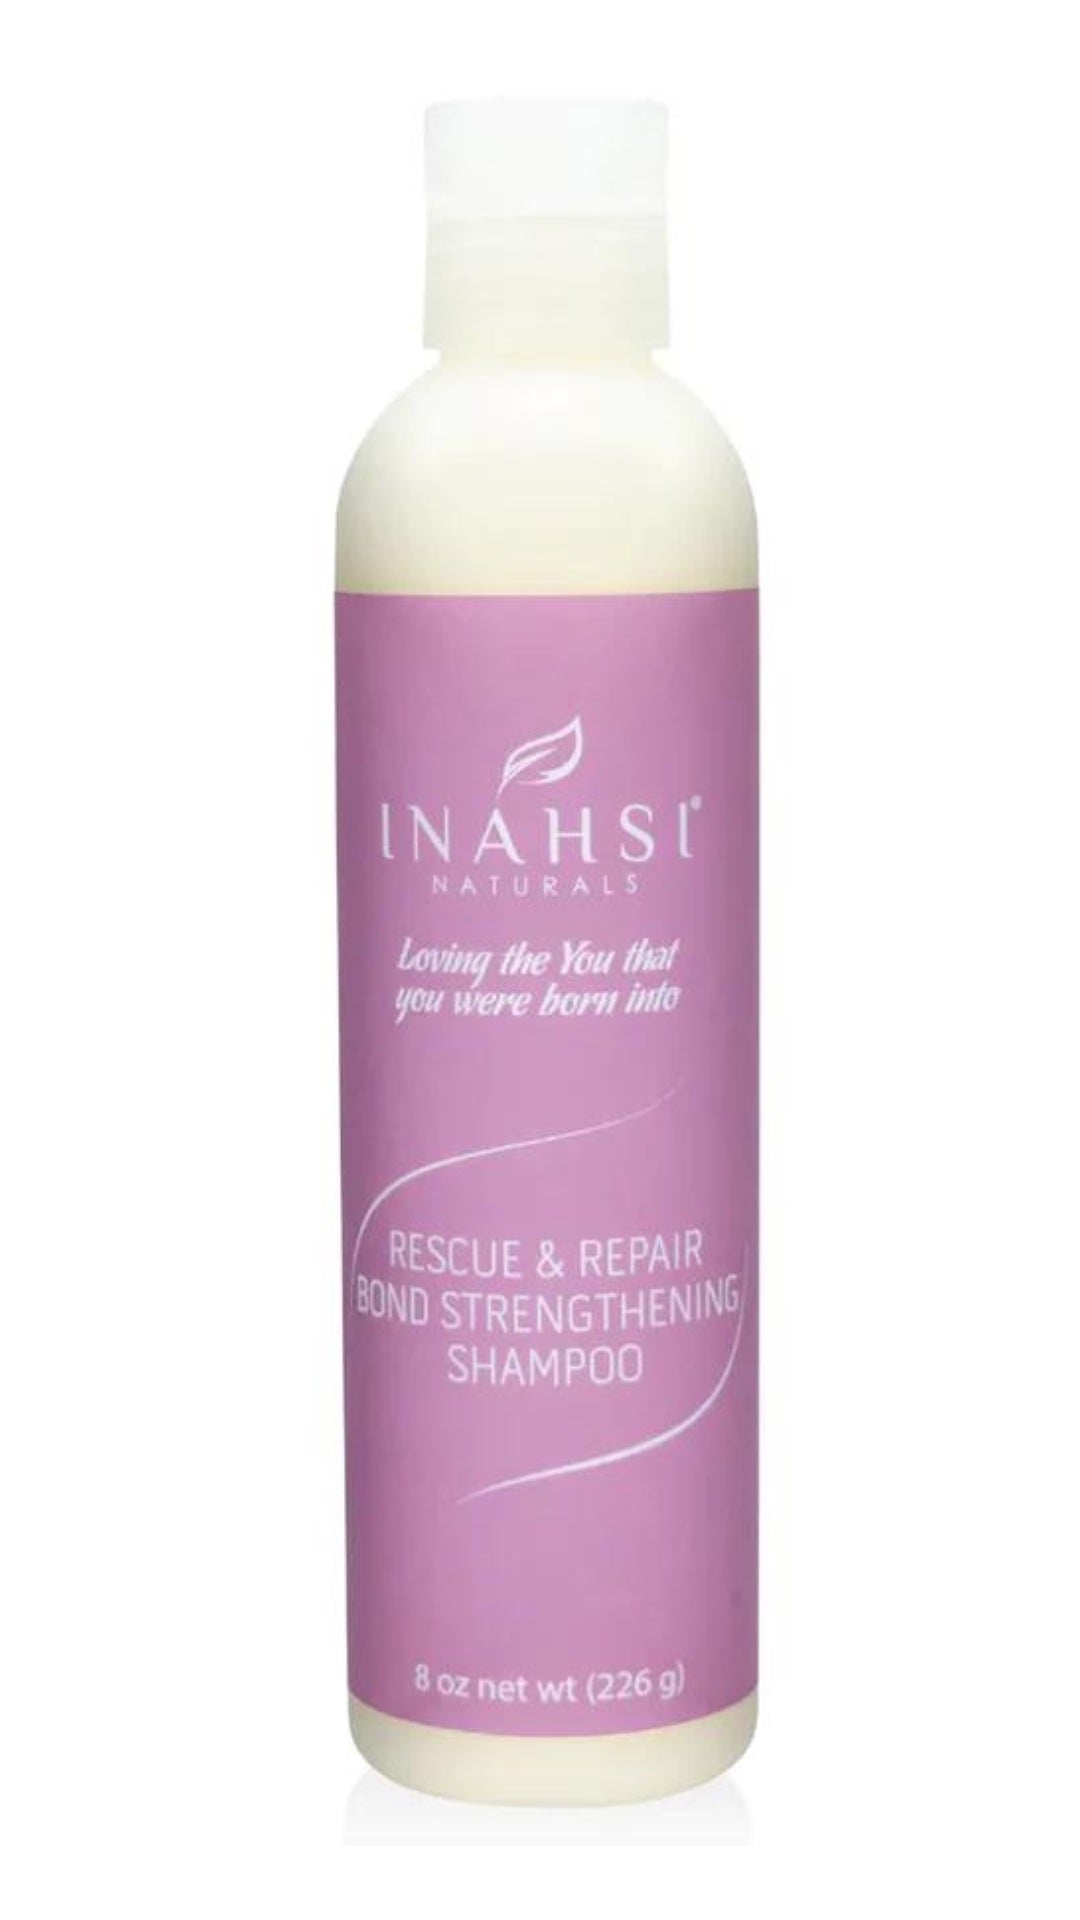 INAHSI - Rescue & Repair Bond Strengthening Shampoo